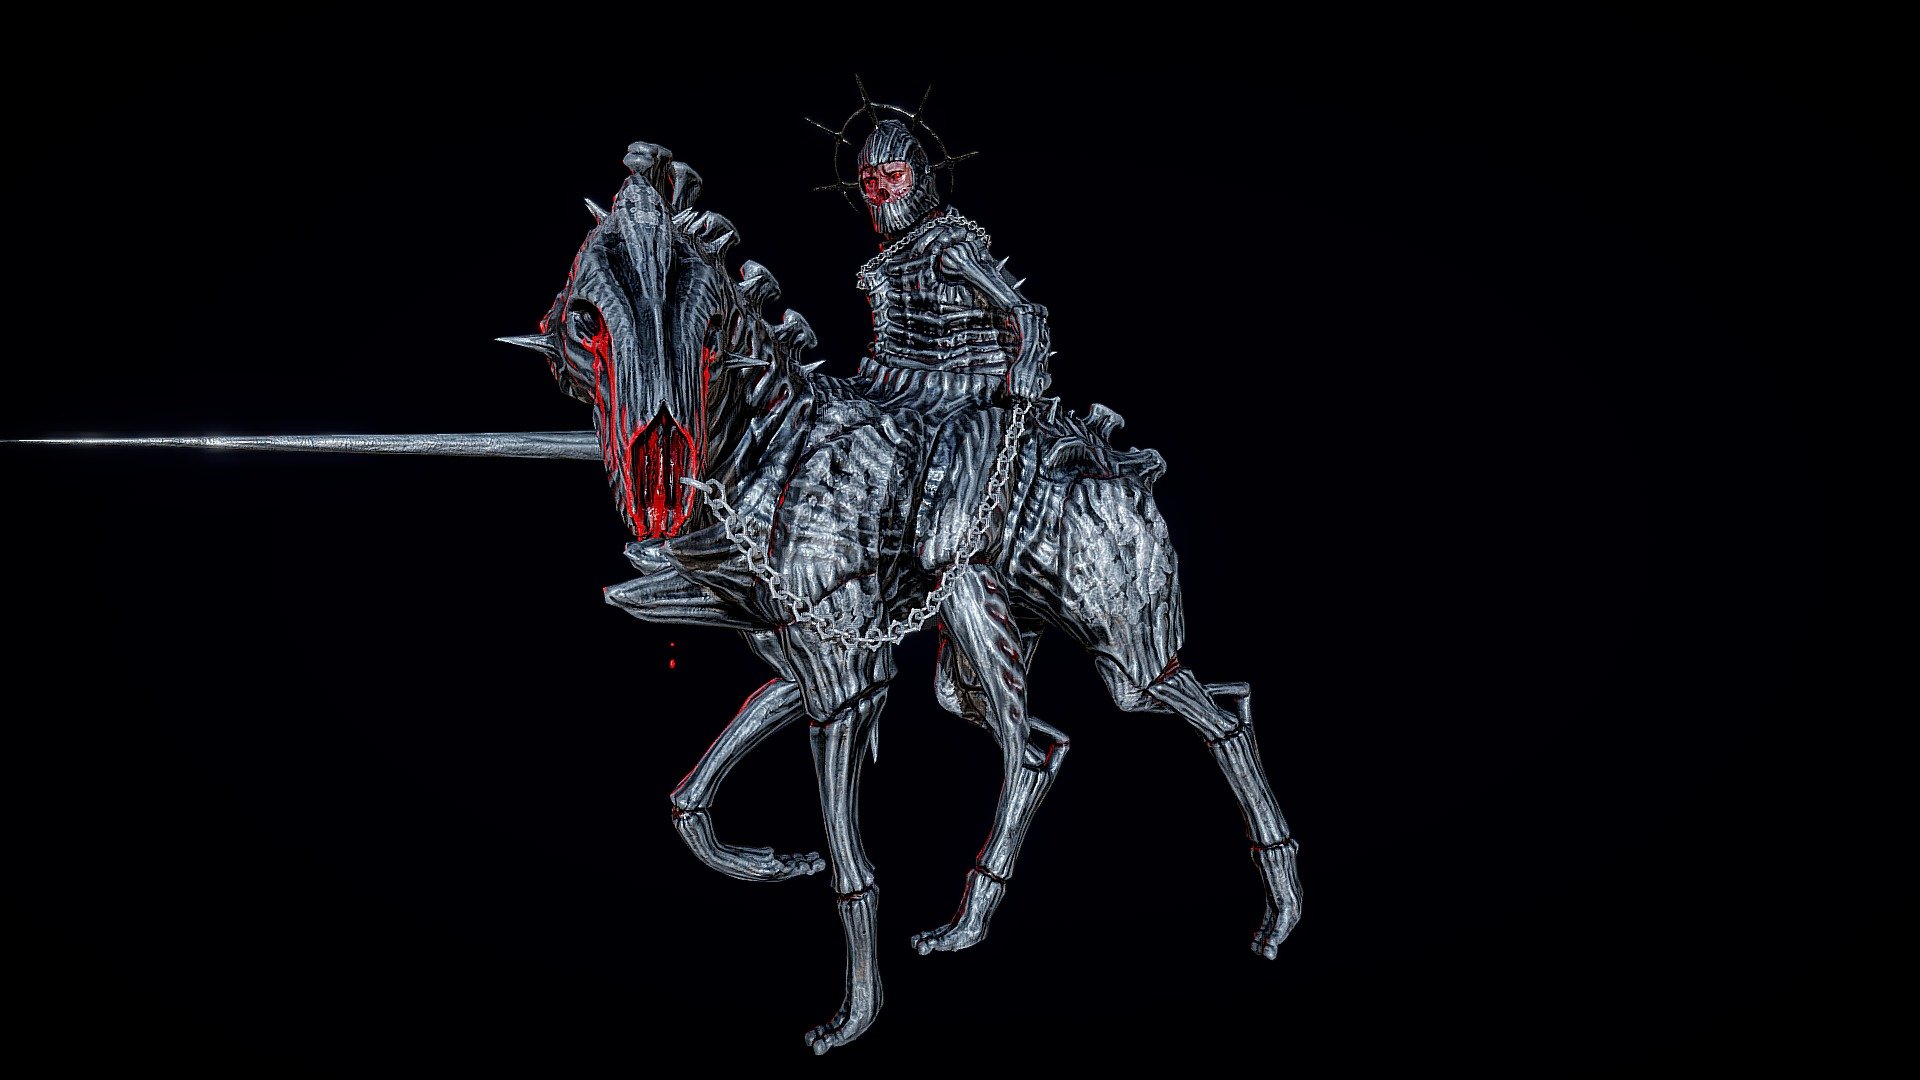 Demonic horseman I made - Death Knight - 3D model by Pedro B. Goulart (@Pebegou) 3d model